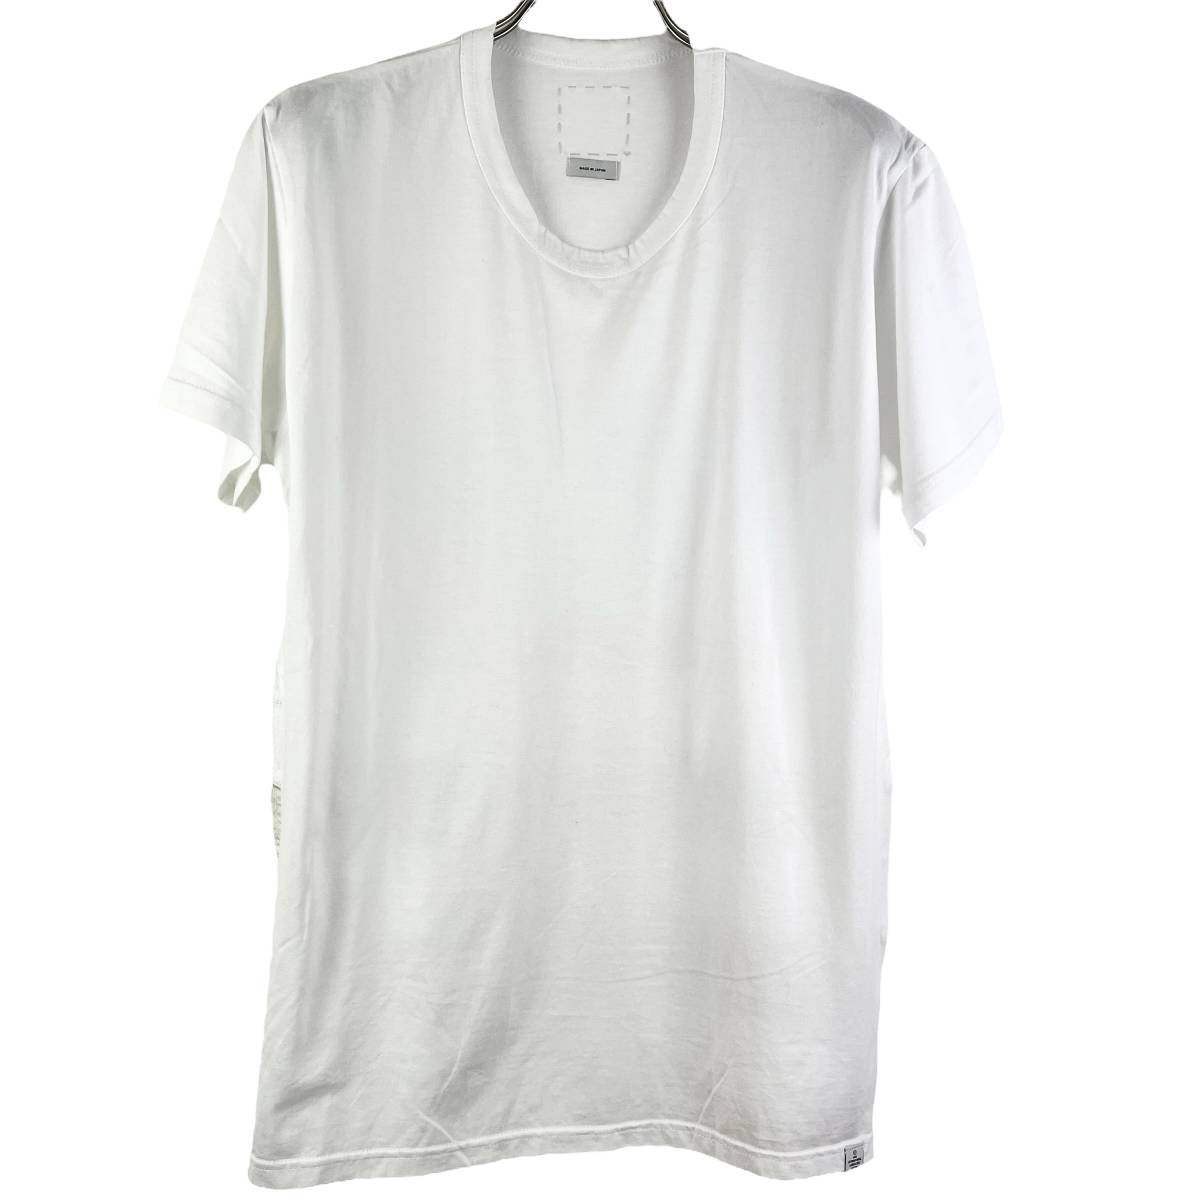 VISVIM(ビズビム) Back Star Shortsleeve T Shirt (white)